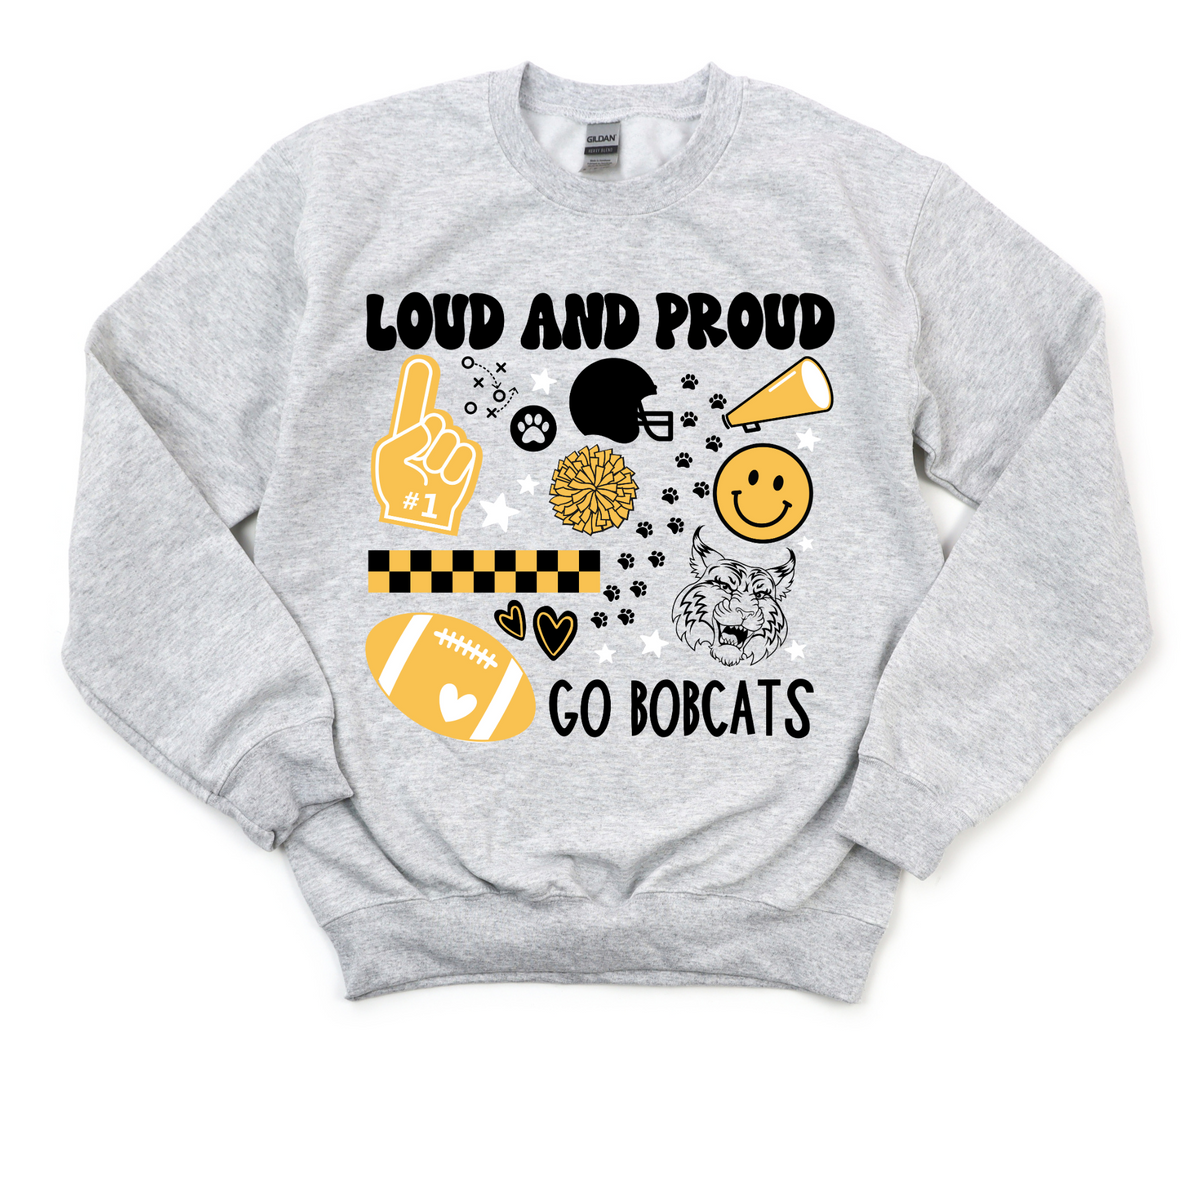 Bobcat Loud+Proud Crewneck Sweatshirt